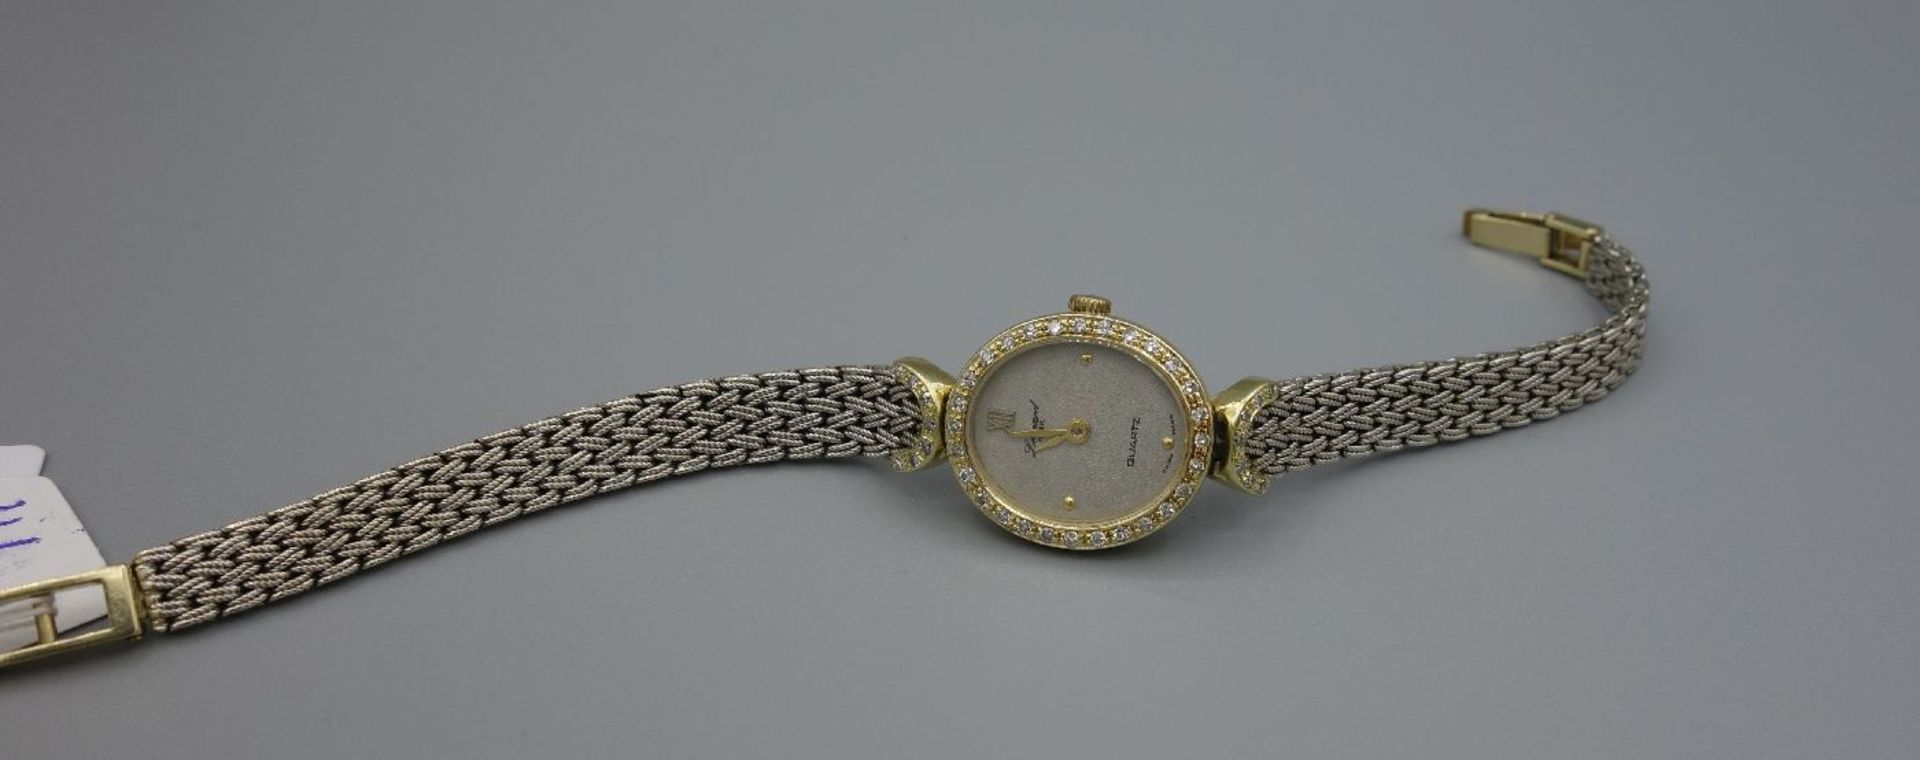 ELEGANTE DAMEN-ARMBANDUHR - LÉONARD / wristwatch, 2. H. 20. Jh., Quarz-Uhr, Manufaktur Léonard / - Bild 3 aus 7